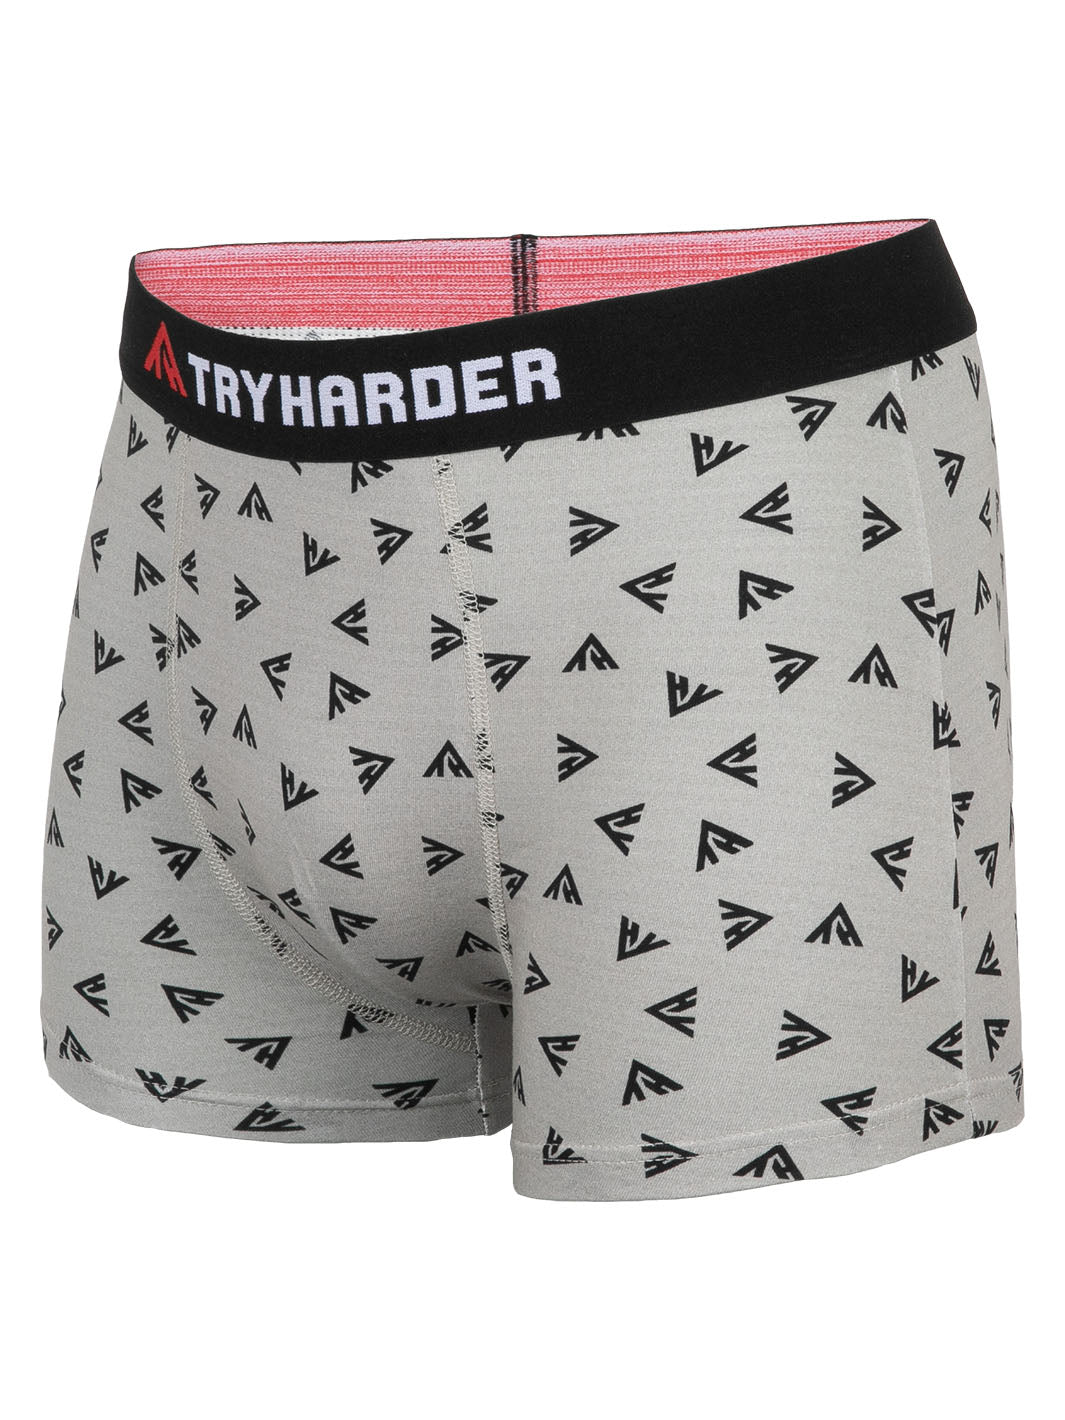 TRYHARDER - Boxer - Grau Logo klein 1 Pack